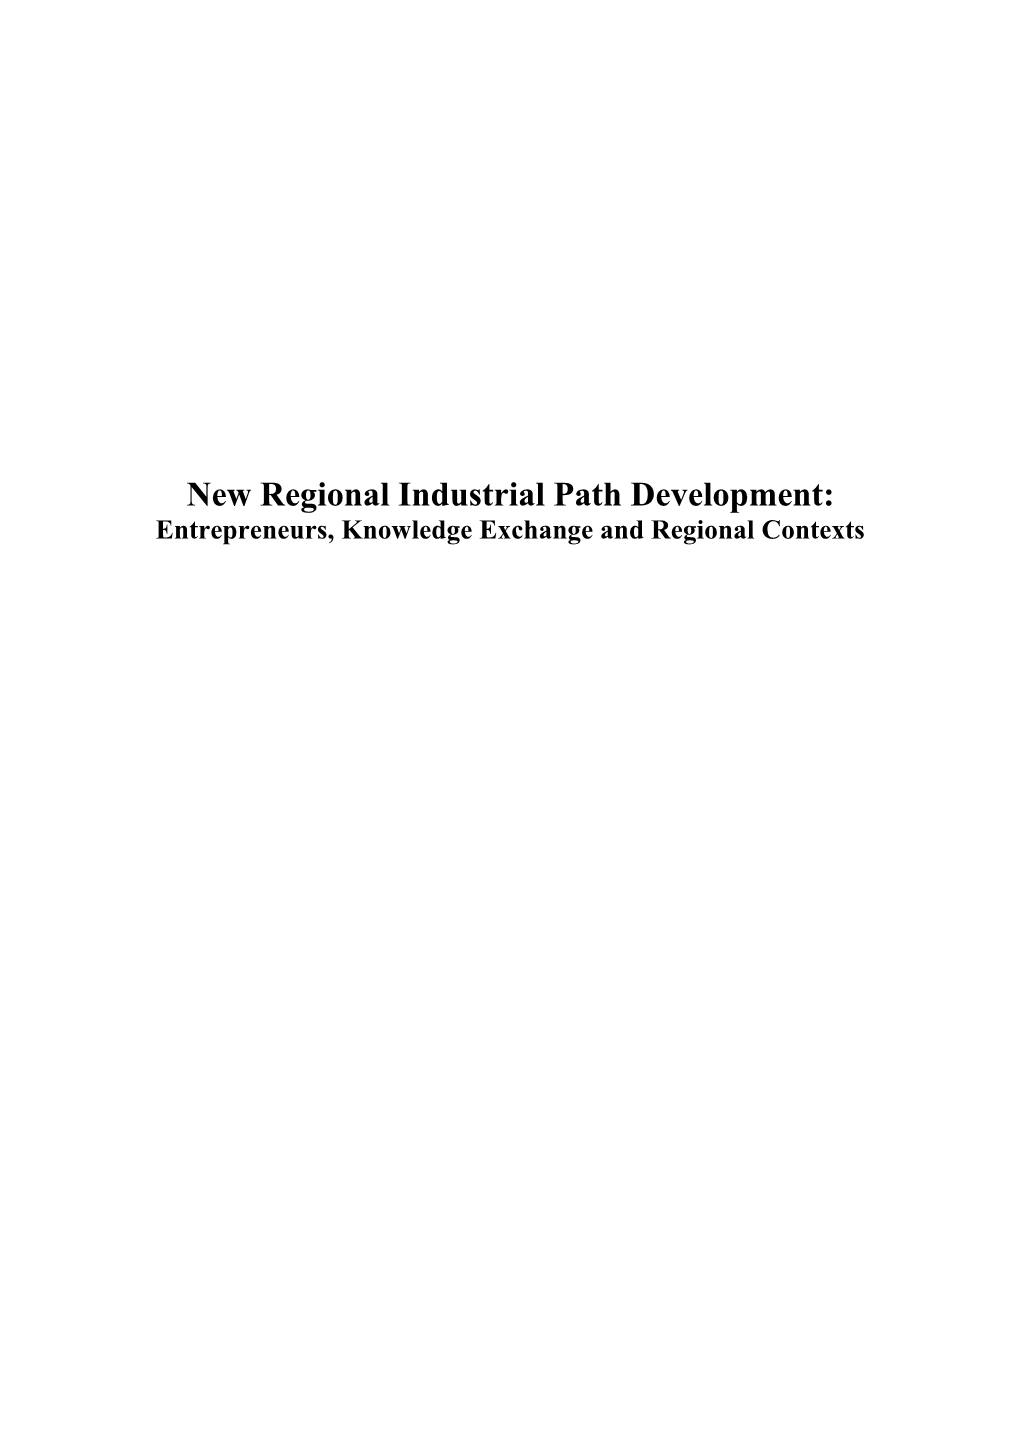 New Regional Industrial Path Development: Entrepreneurs, Knowledge Exchange and Regional Contexts